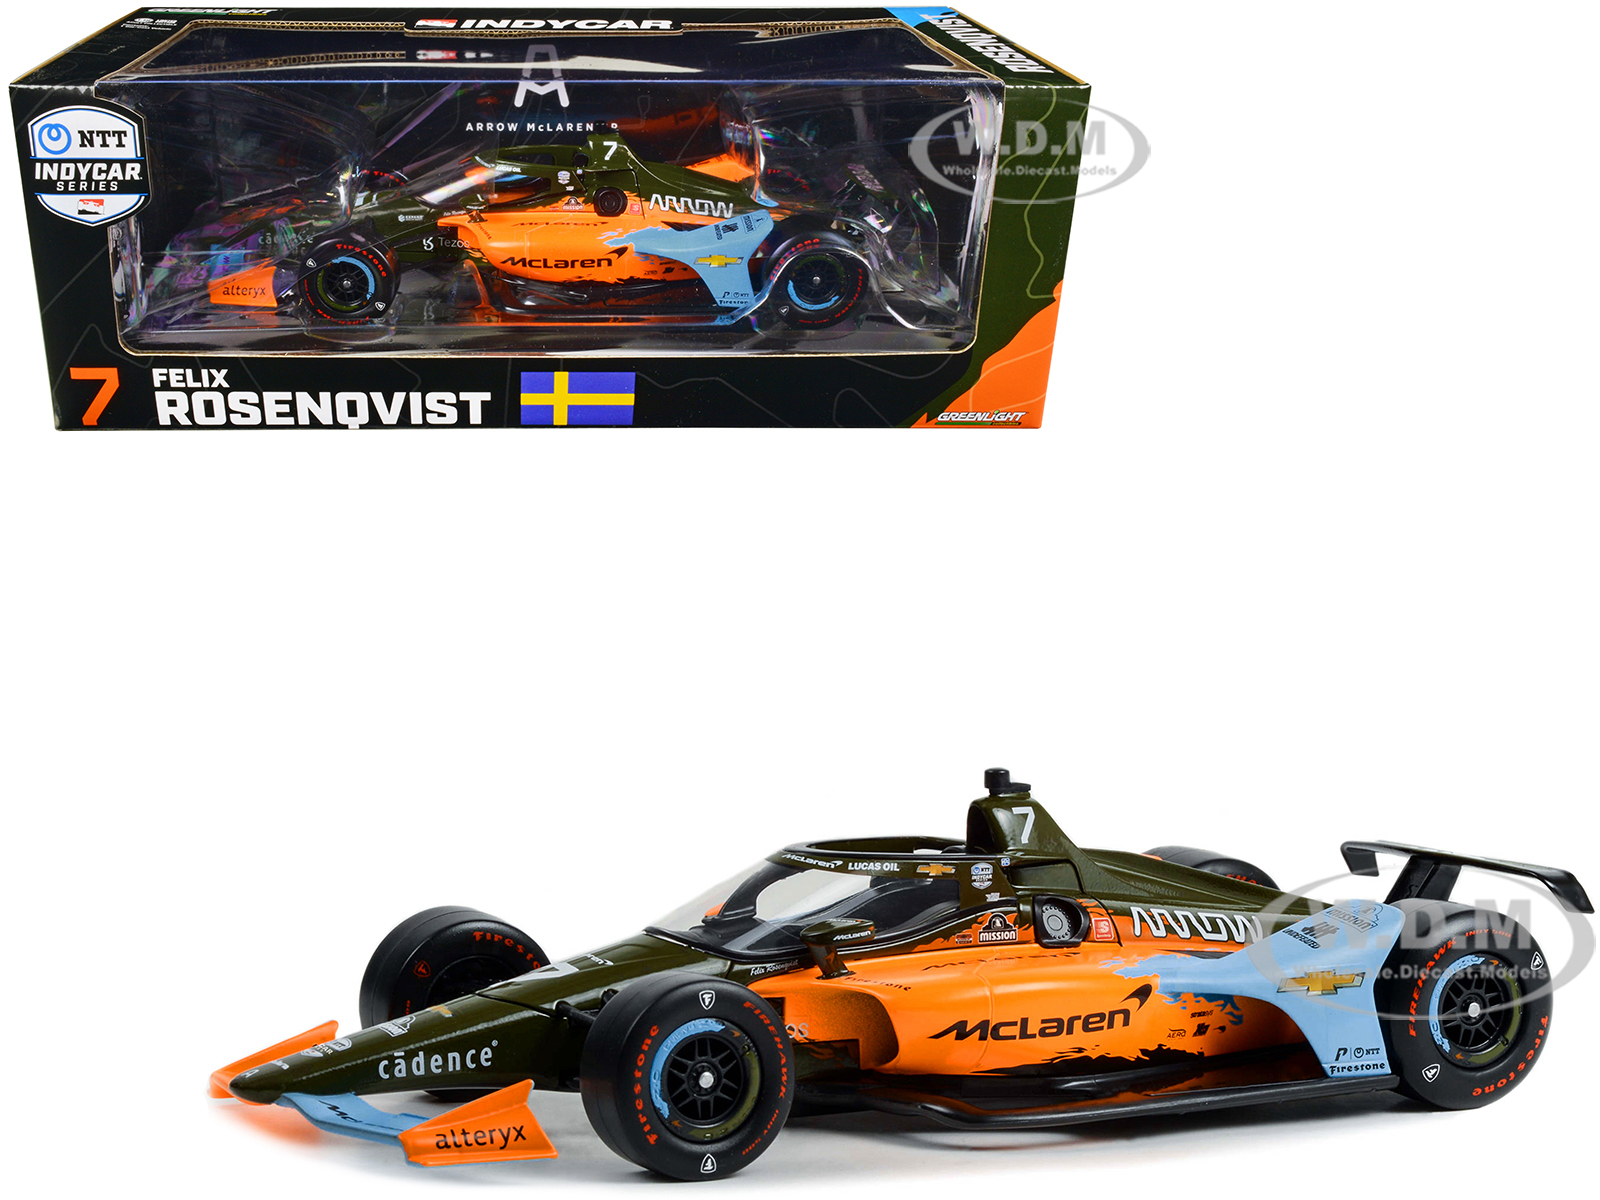 Dallara IndyCar #7 Felix Rosenqvist UNDEFEATED Arrow McLaren SP Indianapolis 500 NTT IndyCar Series (2022) 1/18 Diecast Model Car by Greenlight